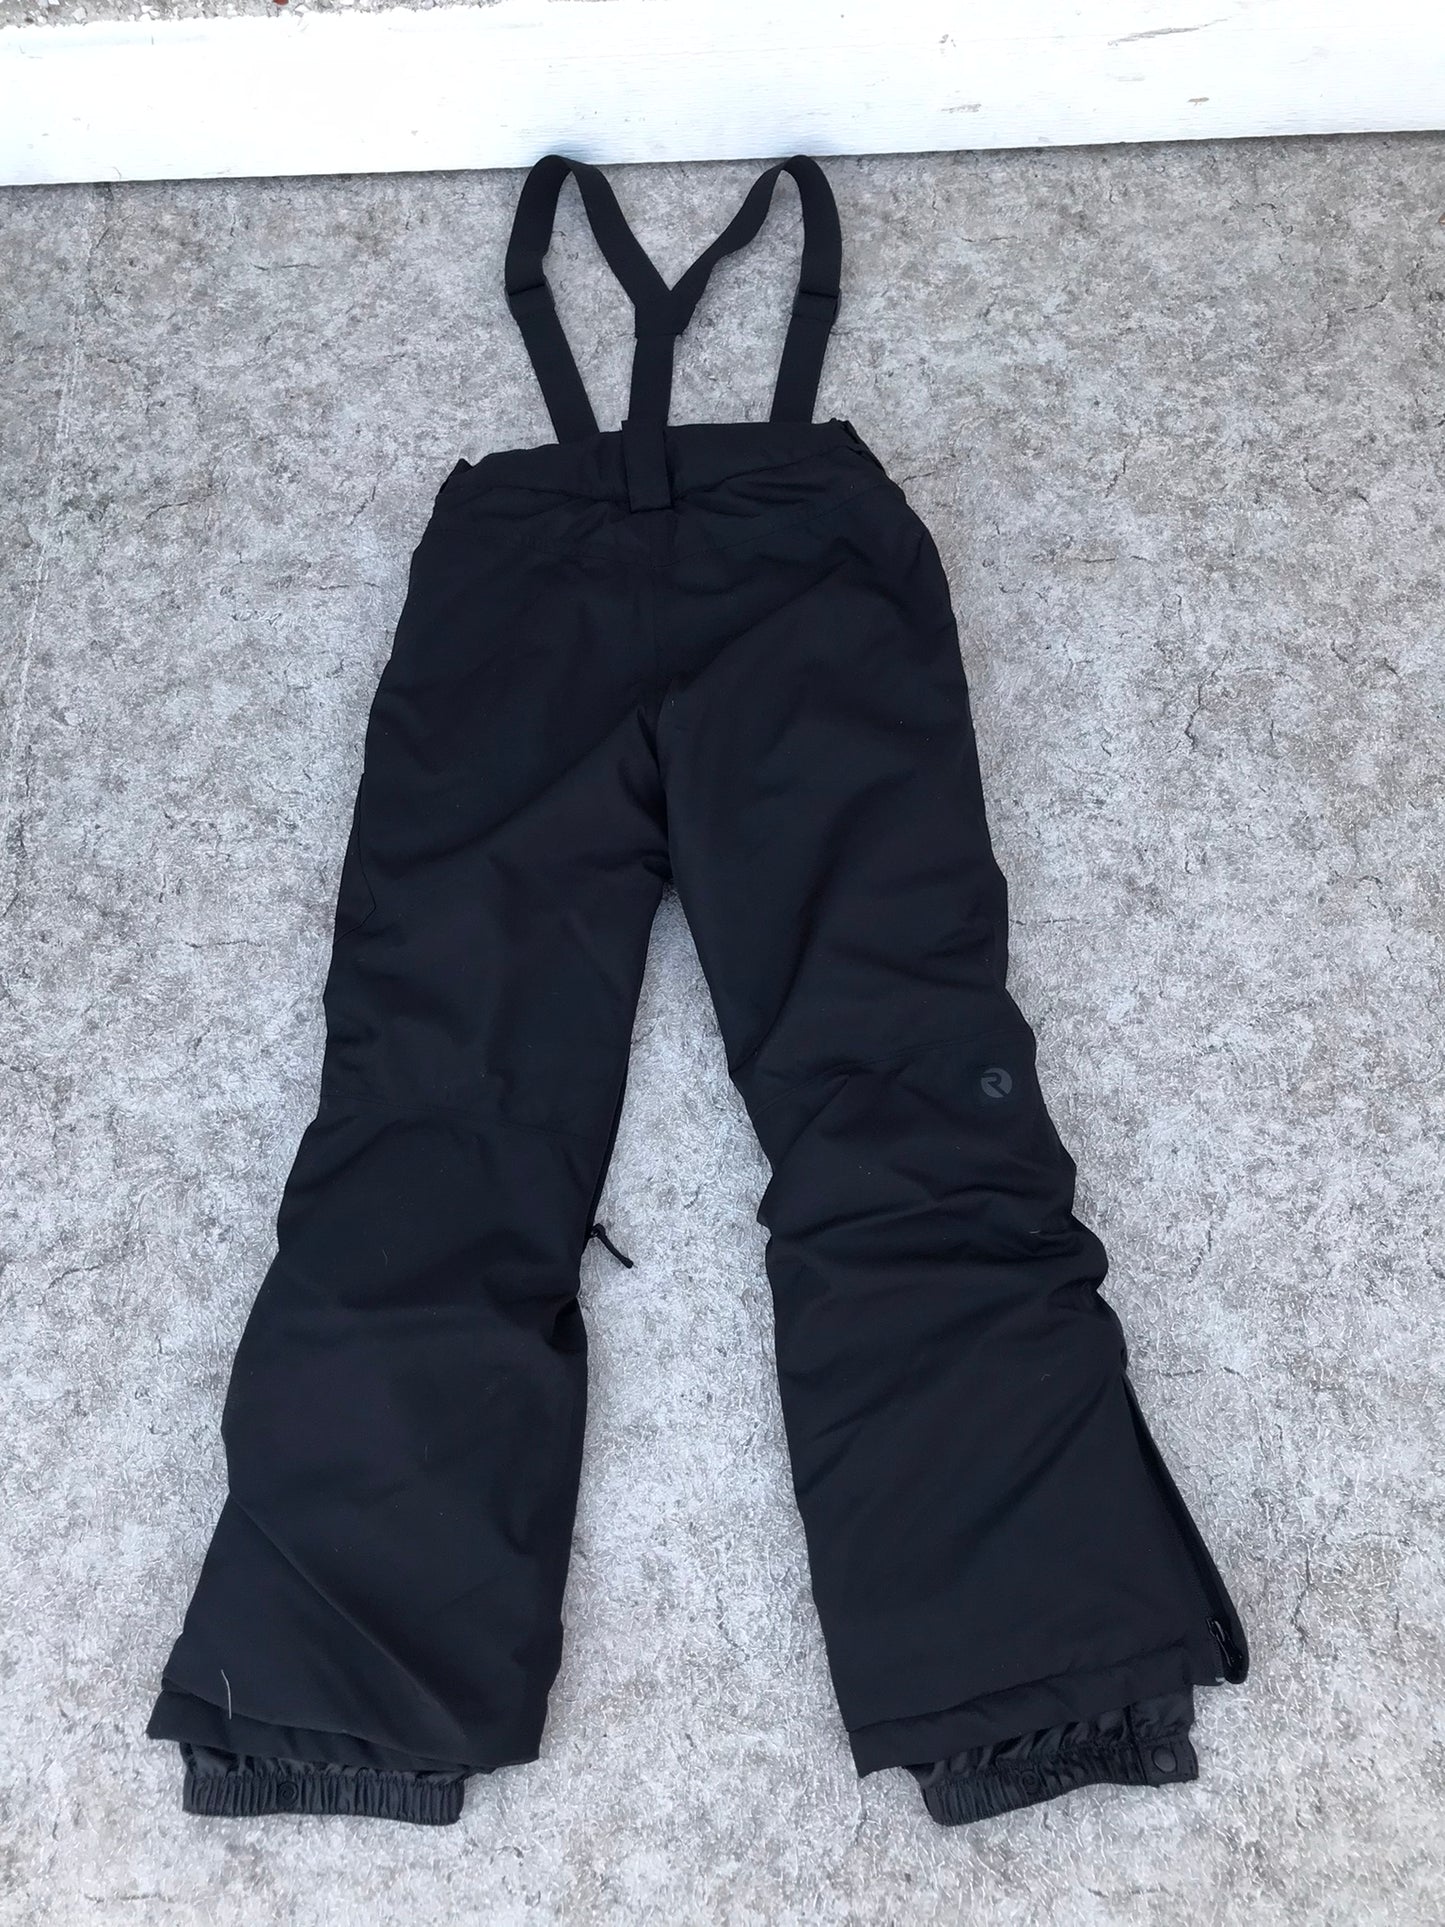 Snow Pants Child Size 8-10 Ripzone Waterproof With Bib Black Pink Like New